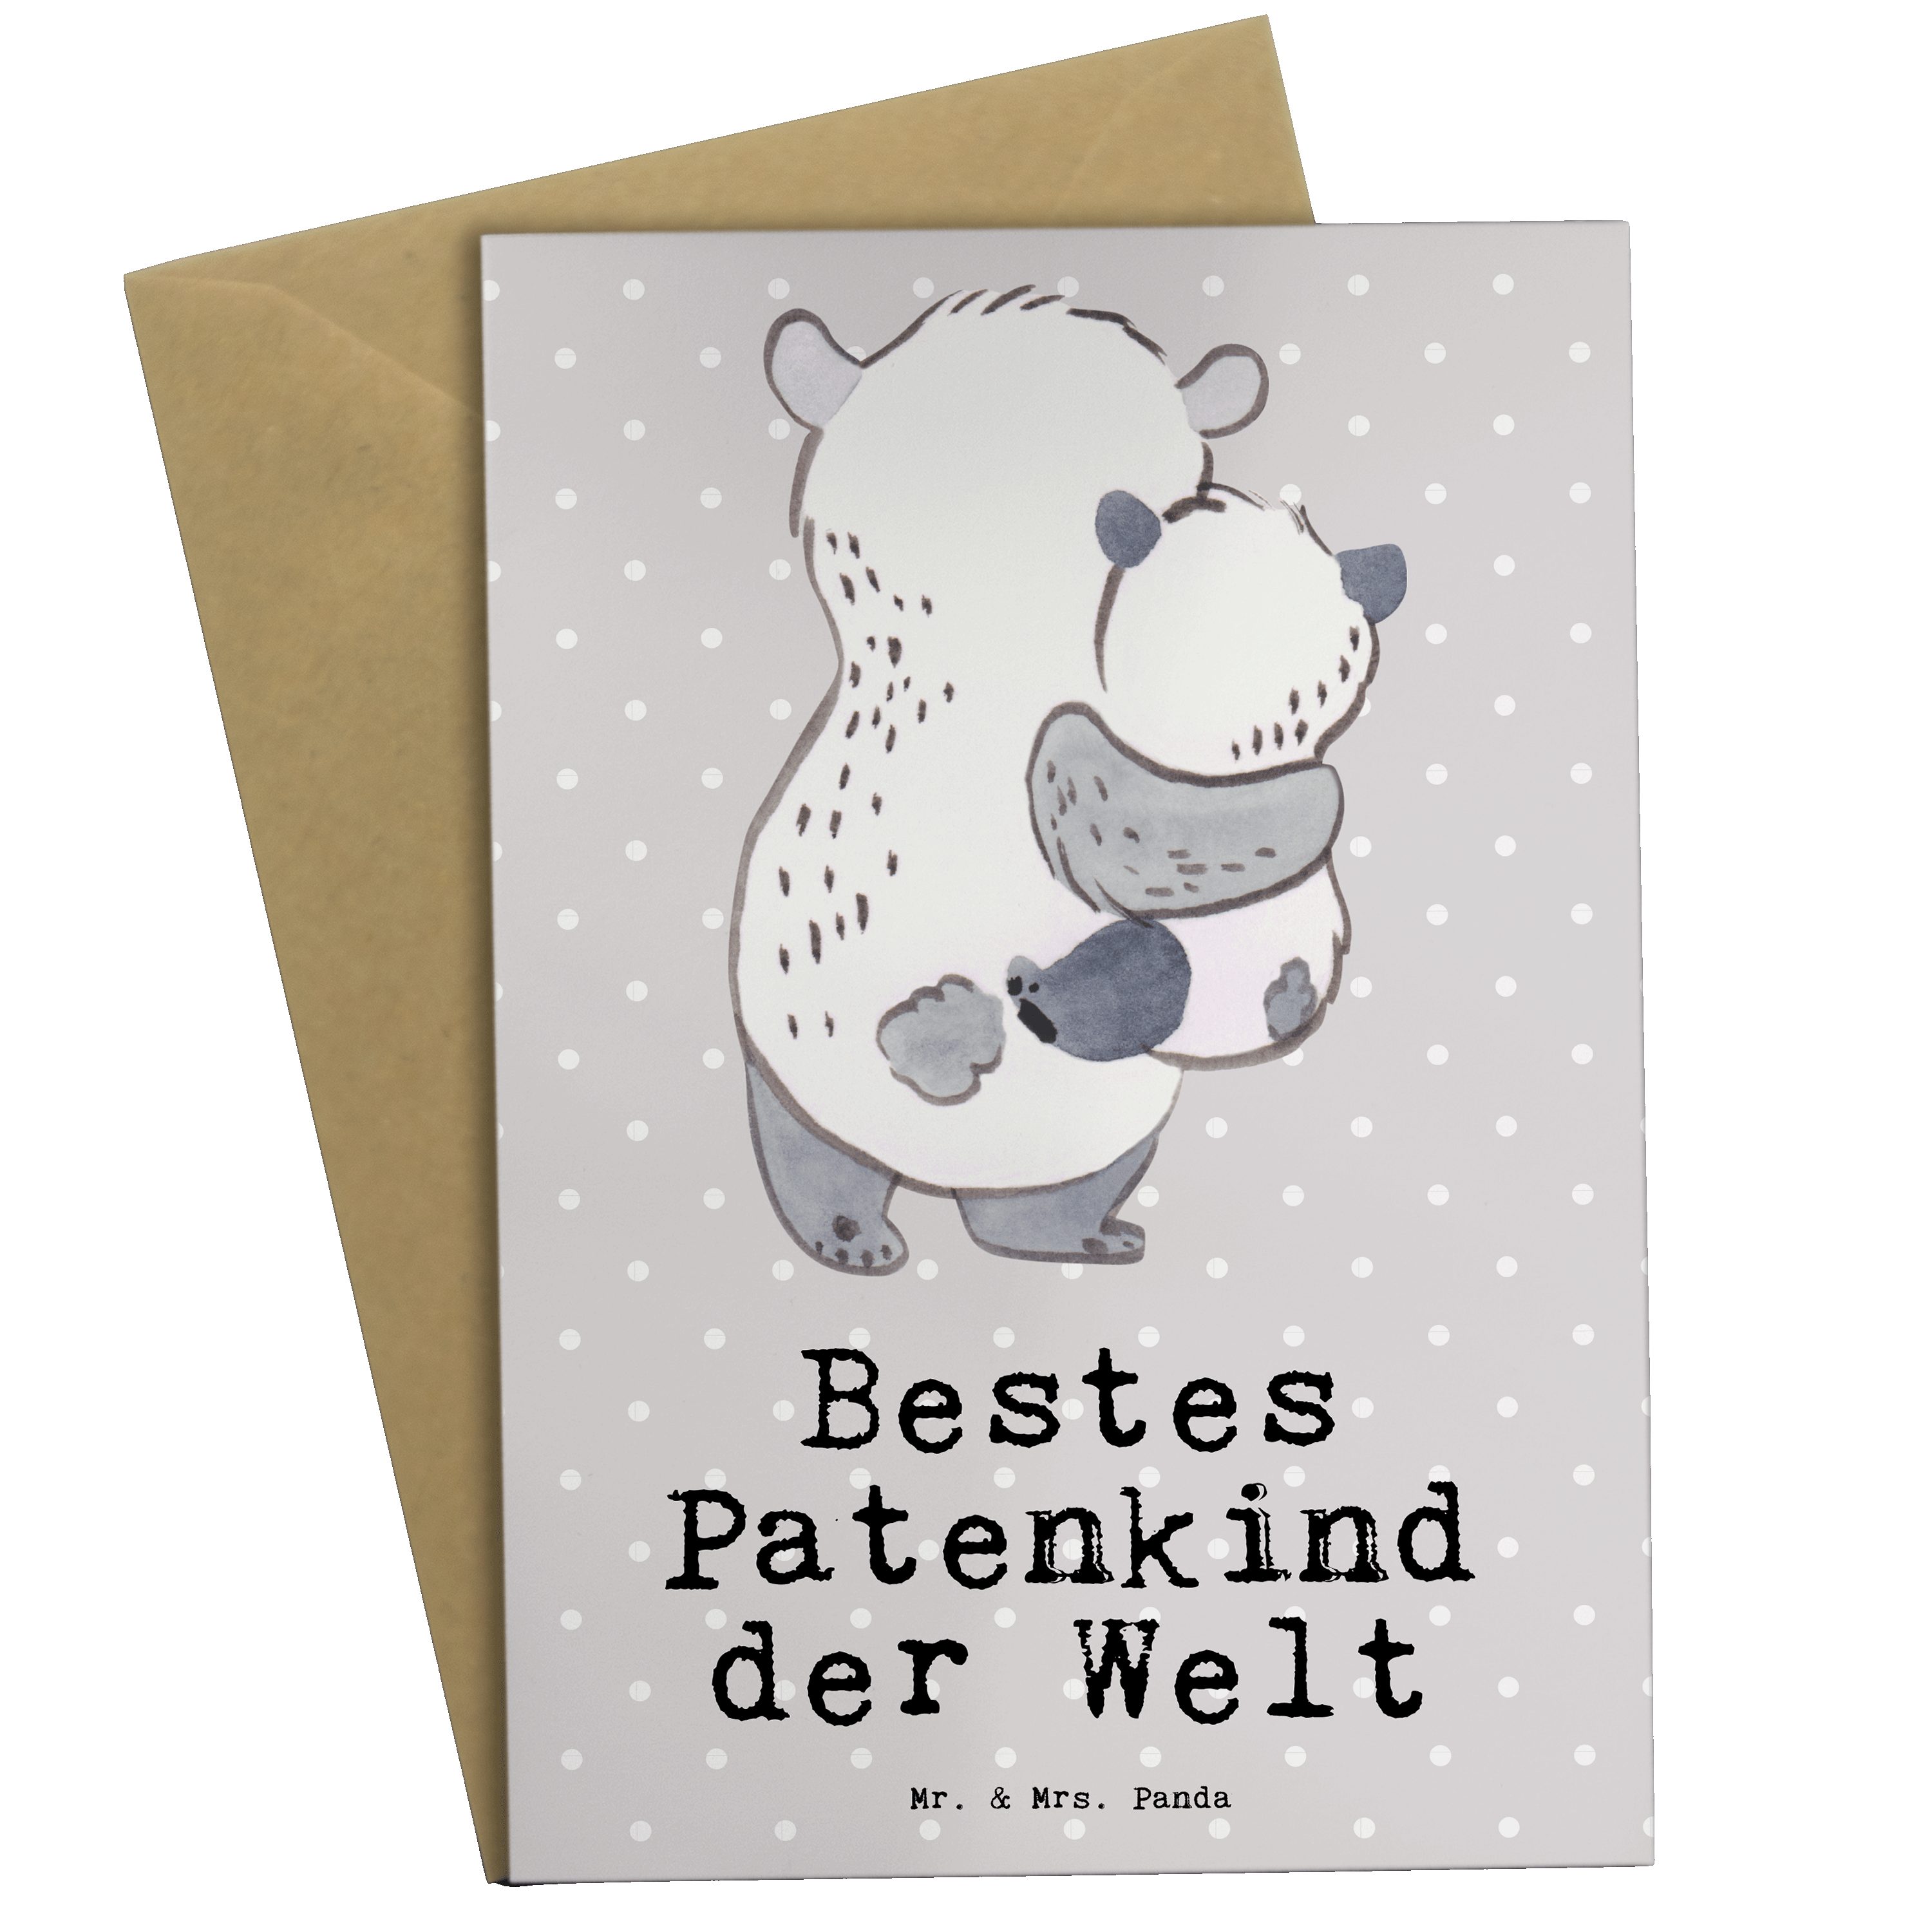 Mr. & Mrs. Panda Grußkarte Panda Bestes Patenkind der Welt - Grau Pastell - Geschenk, Danke, Kla